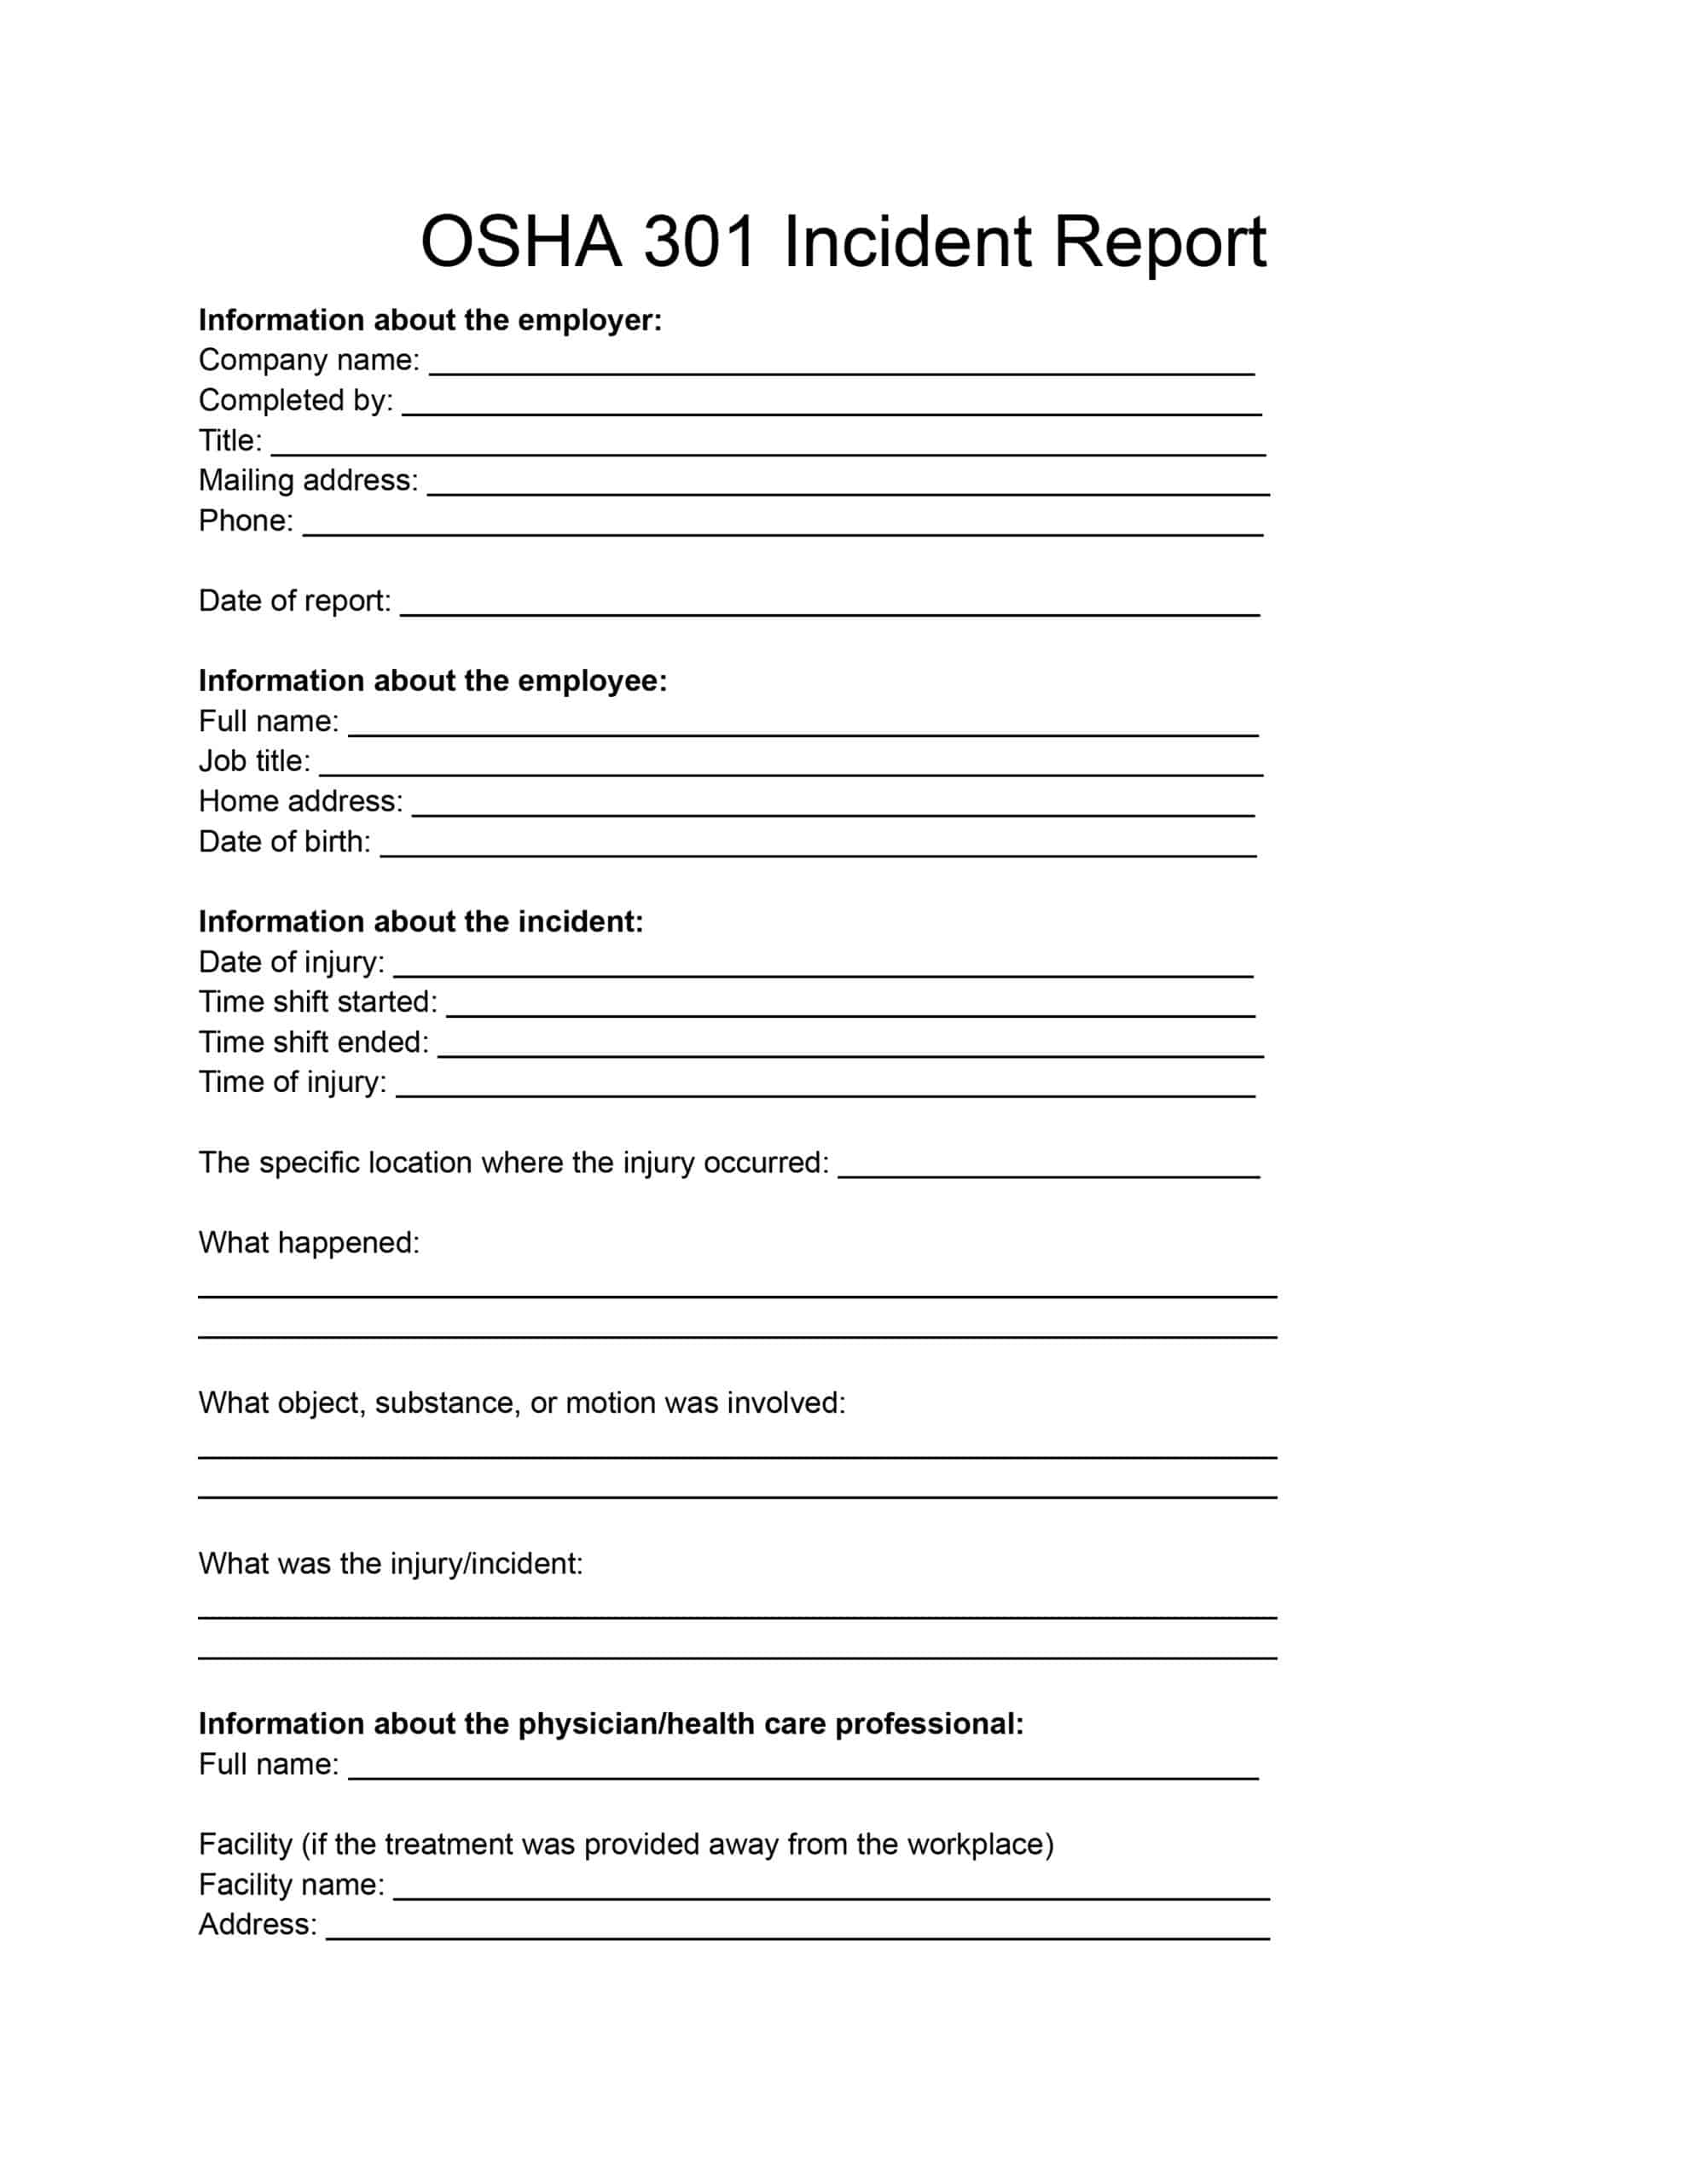 OSHA 301 Incident Report